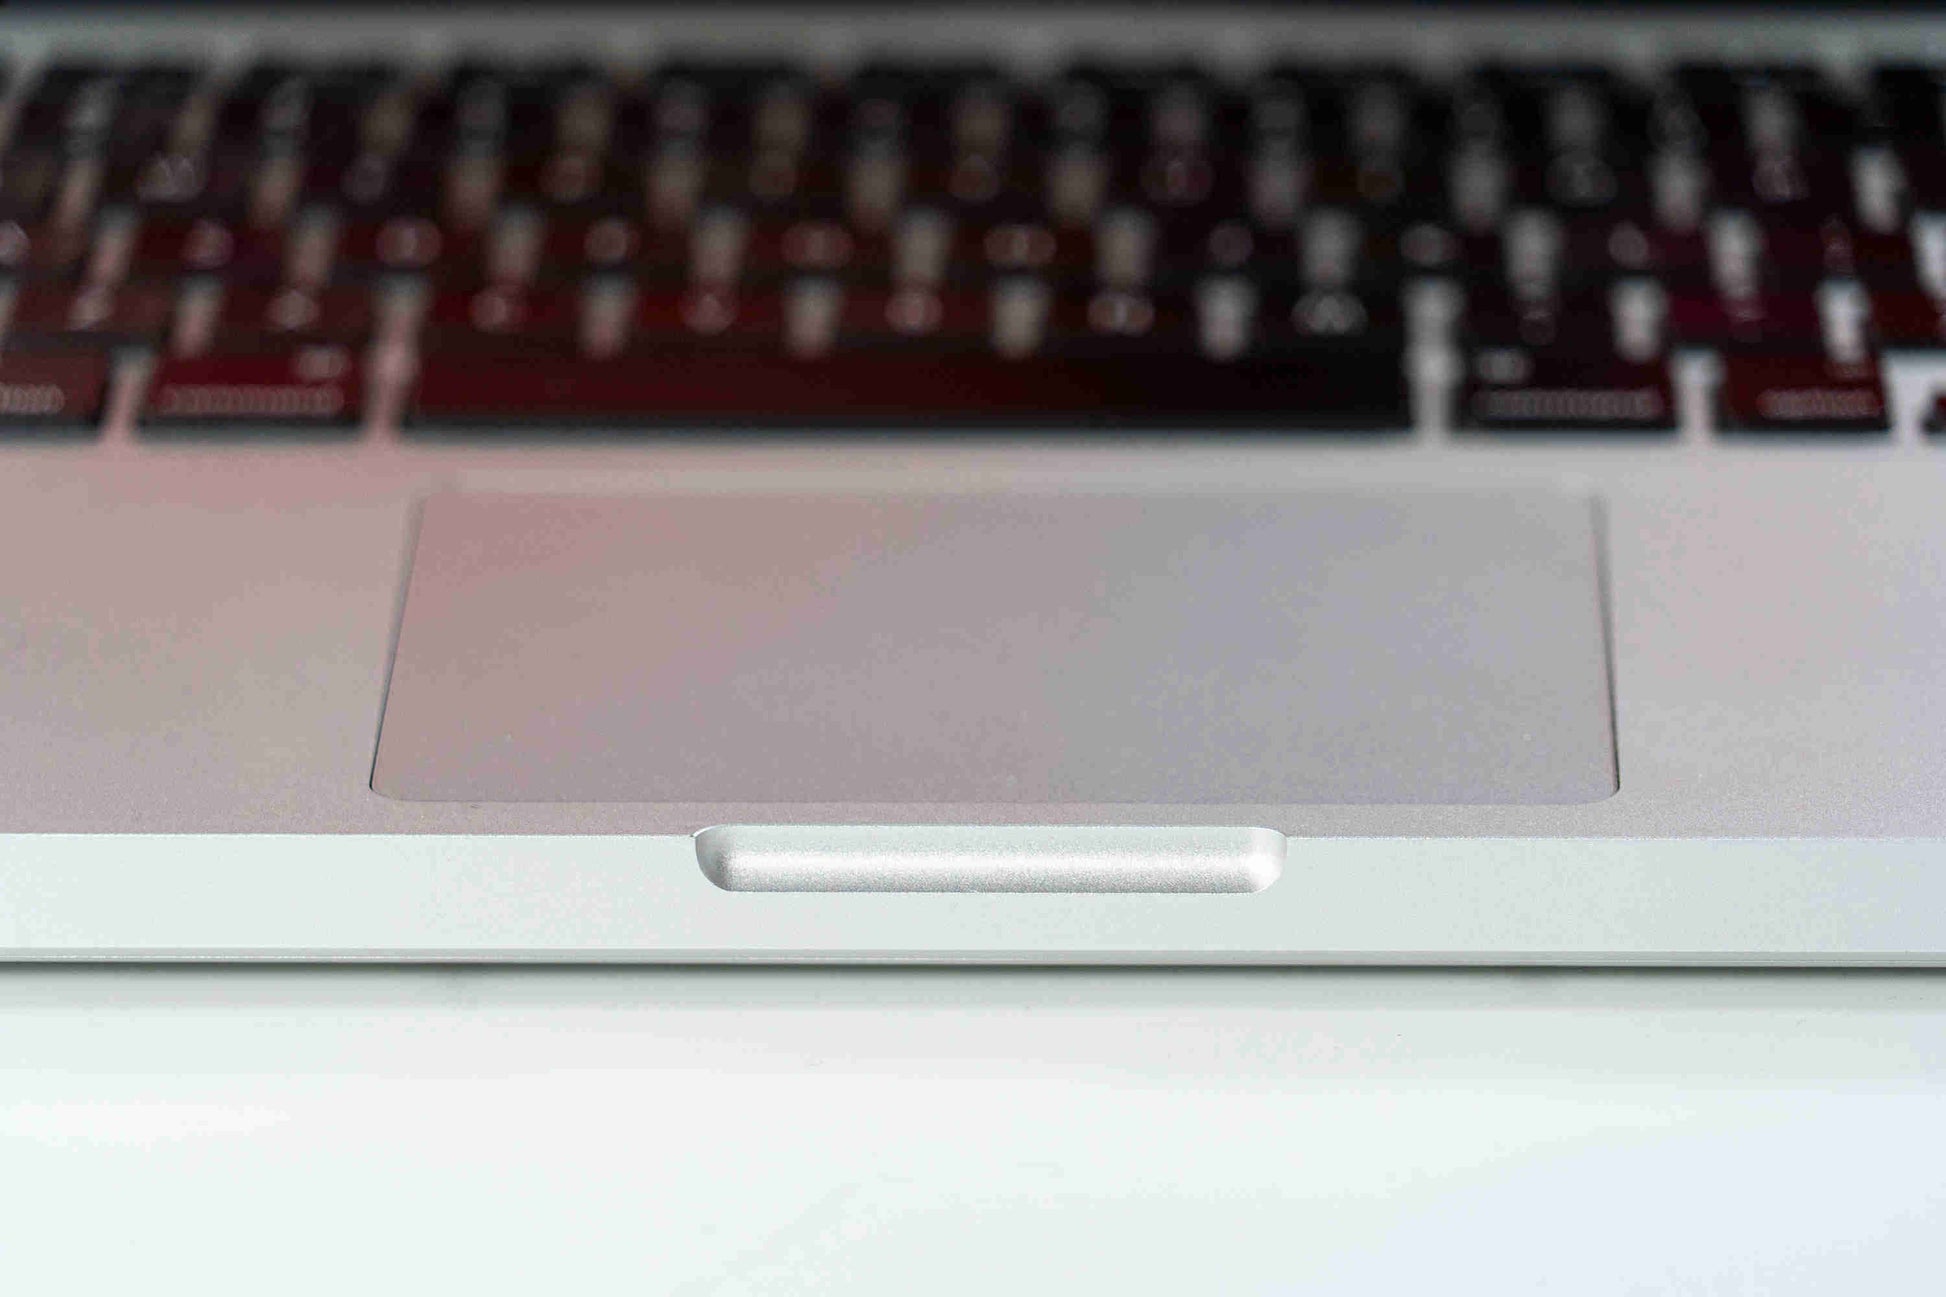 Apple MacBook Pro (13-inch Late 2013) 2.6 GHz I5-4288U 8GB 512GB SSD (Silver)